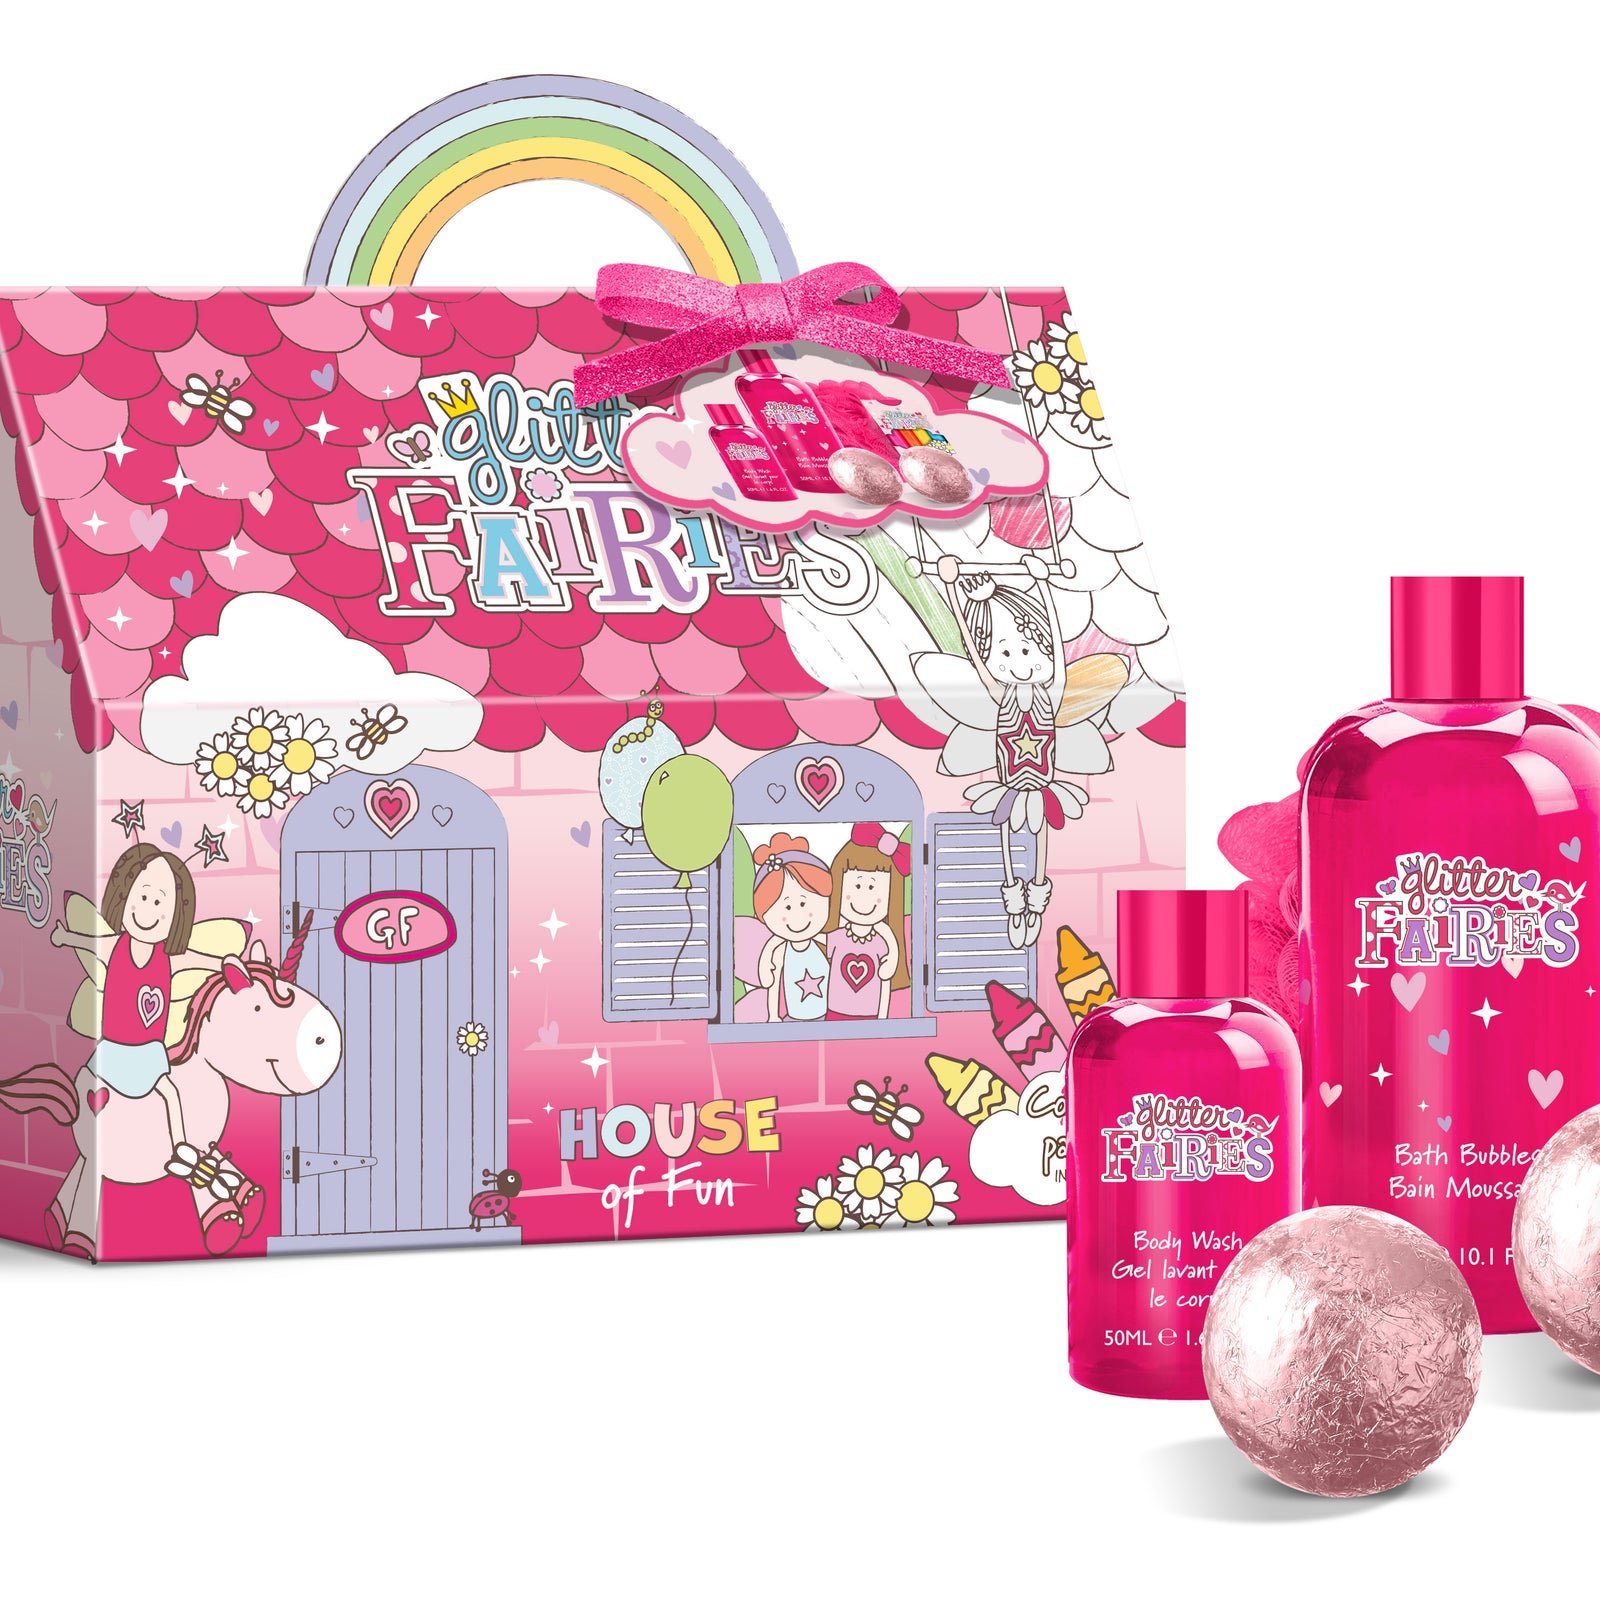 Glitter Fairies House Of Fun Kids Gift Set